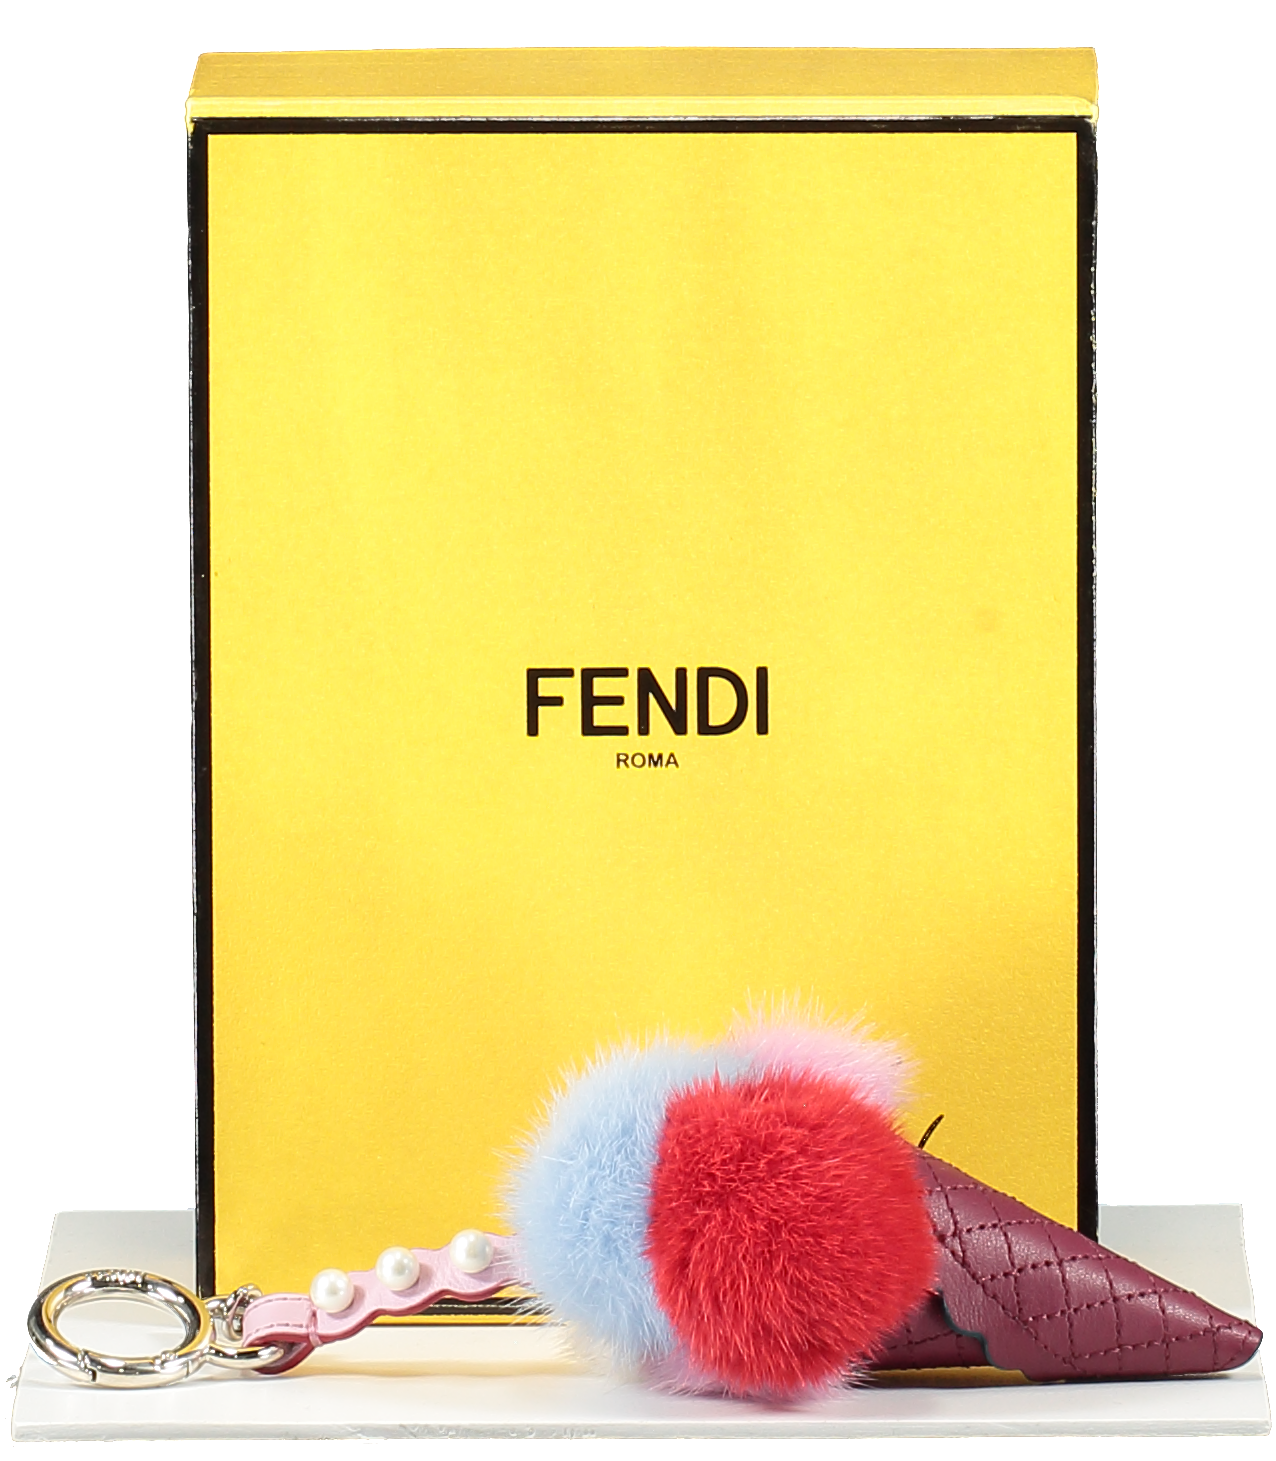 Fendi Multicoloured Mink Fur Ice Cream Cone Bag Charm / Key Ring One Size